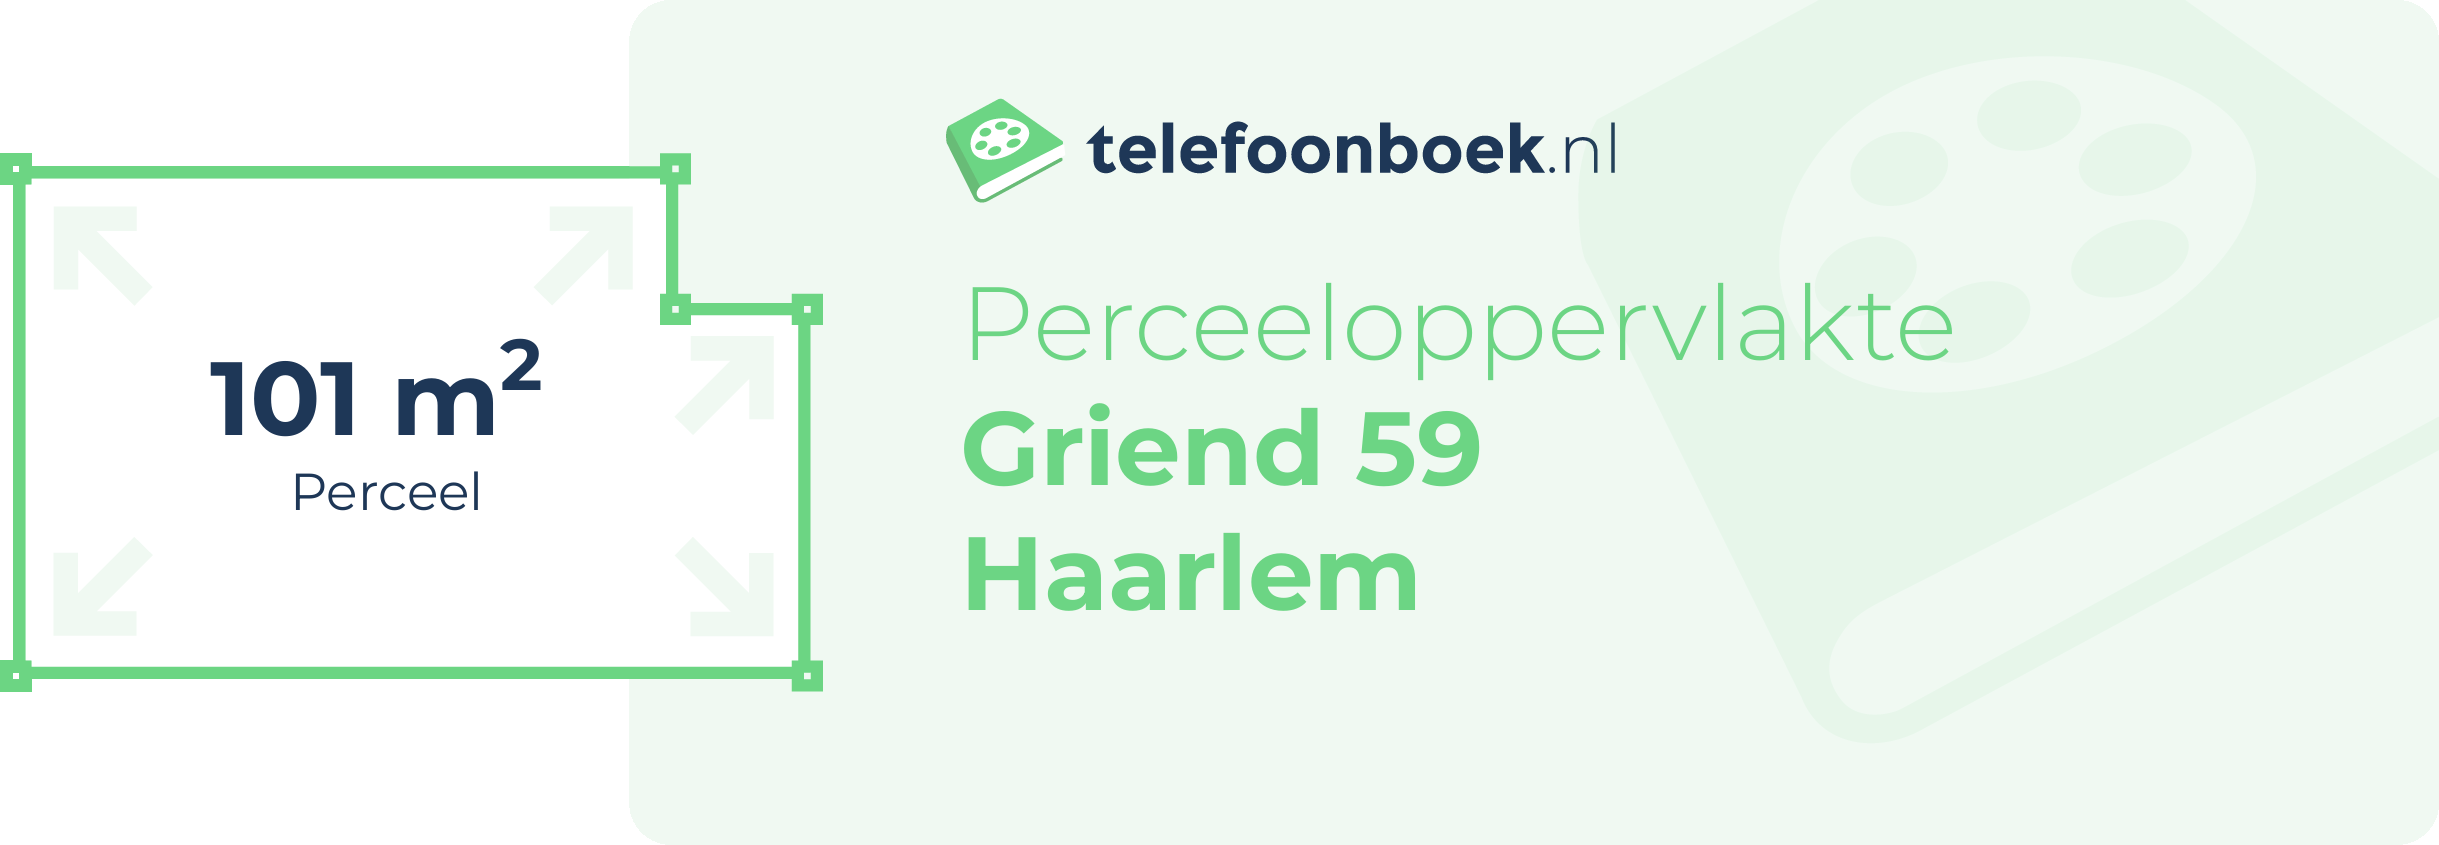 Perceeloppervlakte Griend 59 Haarlem